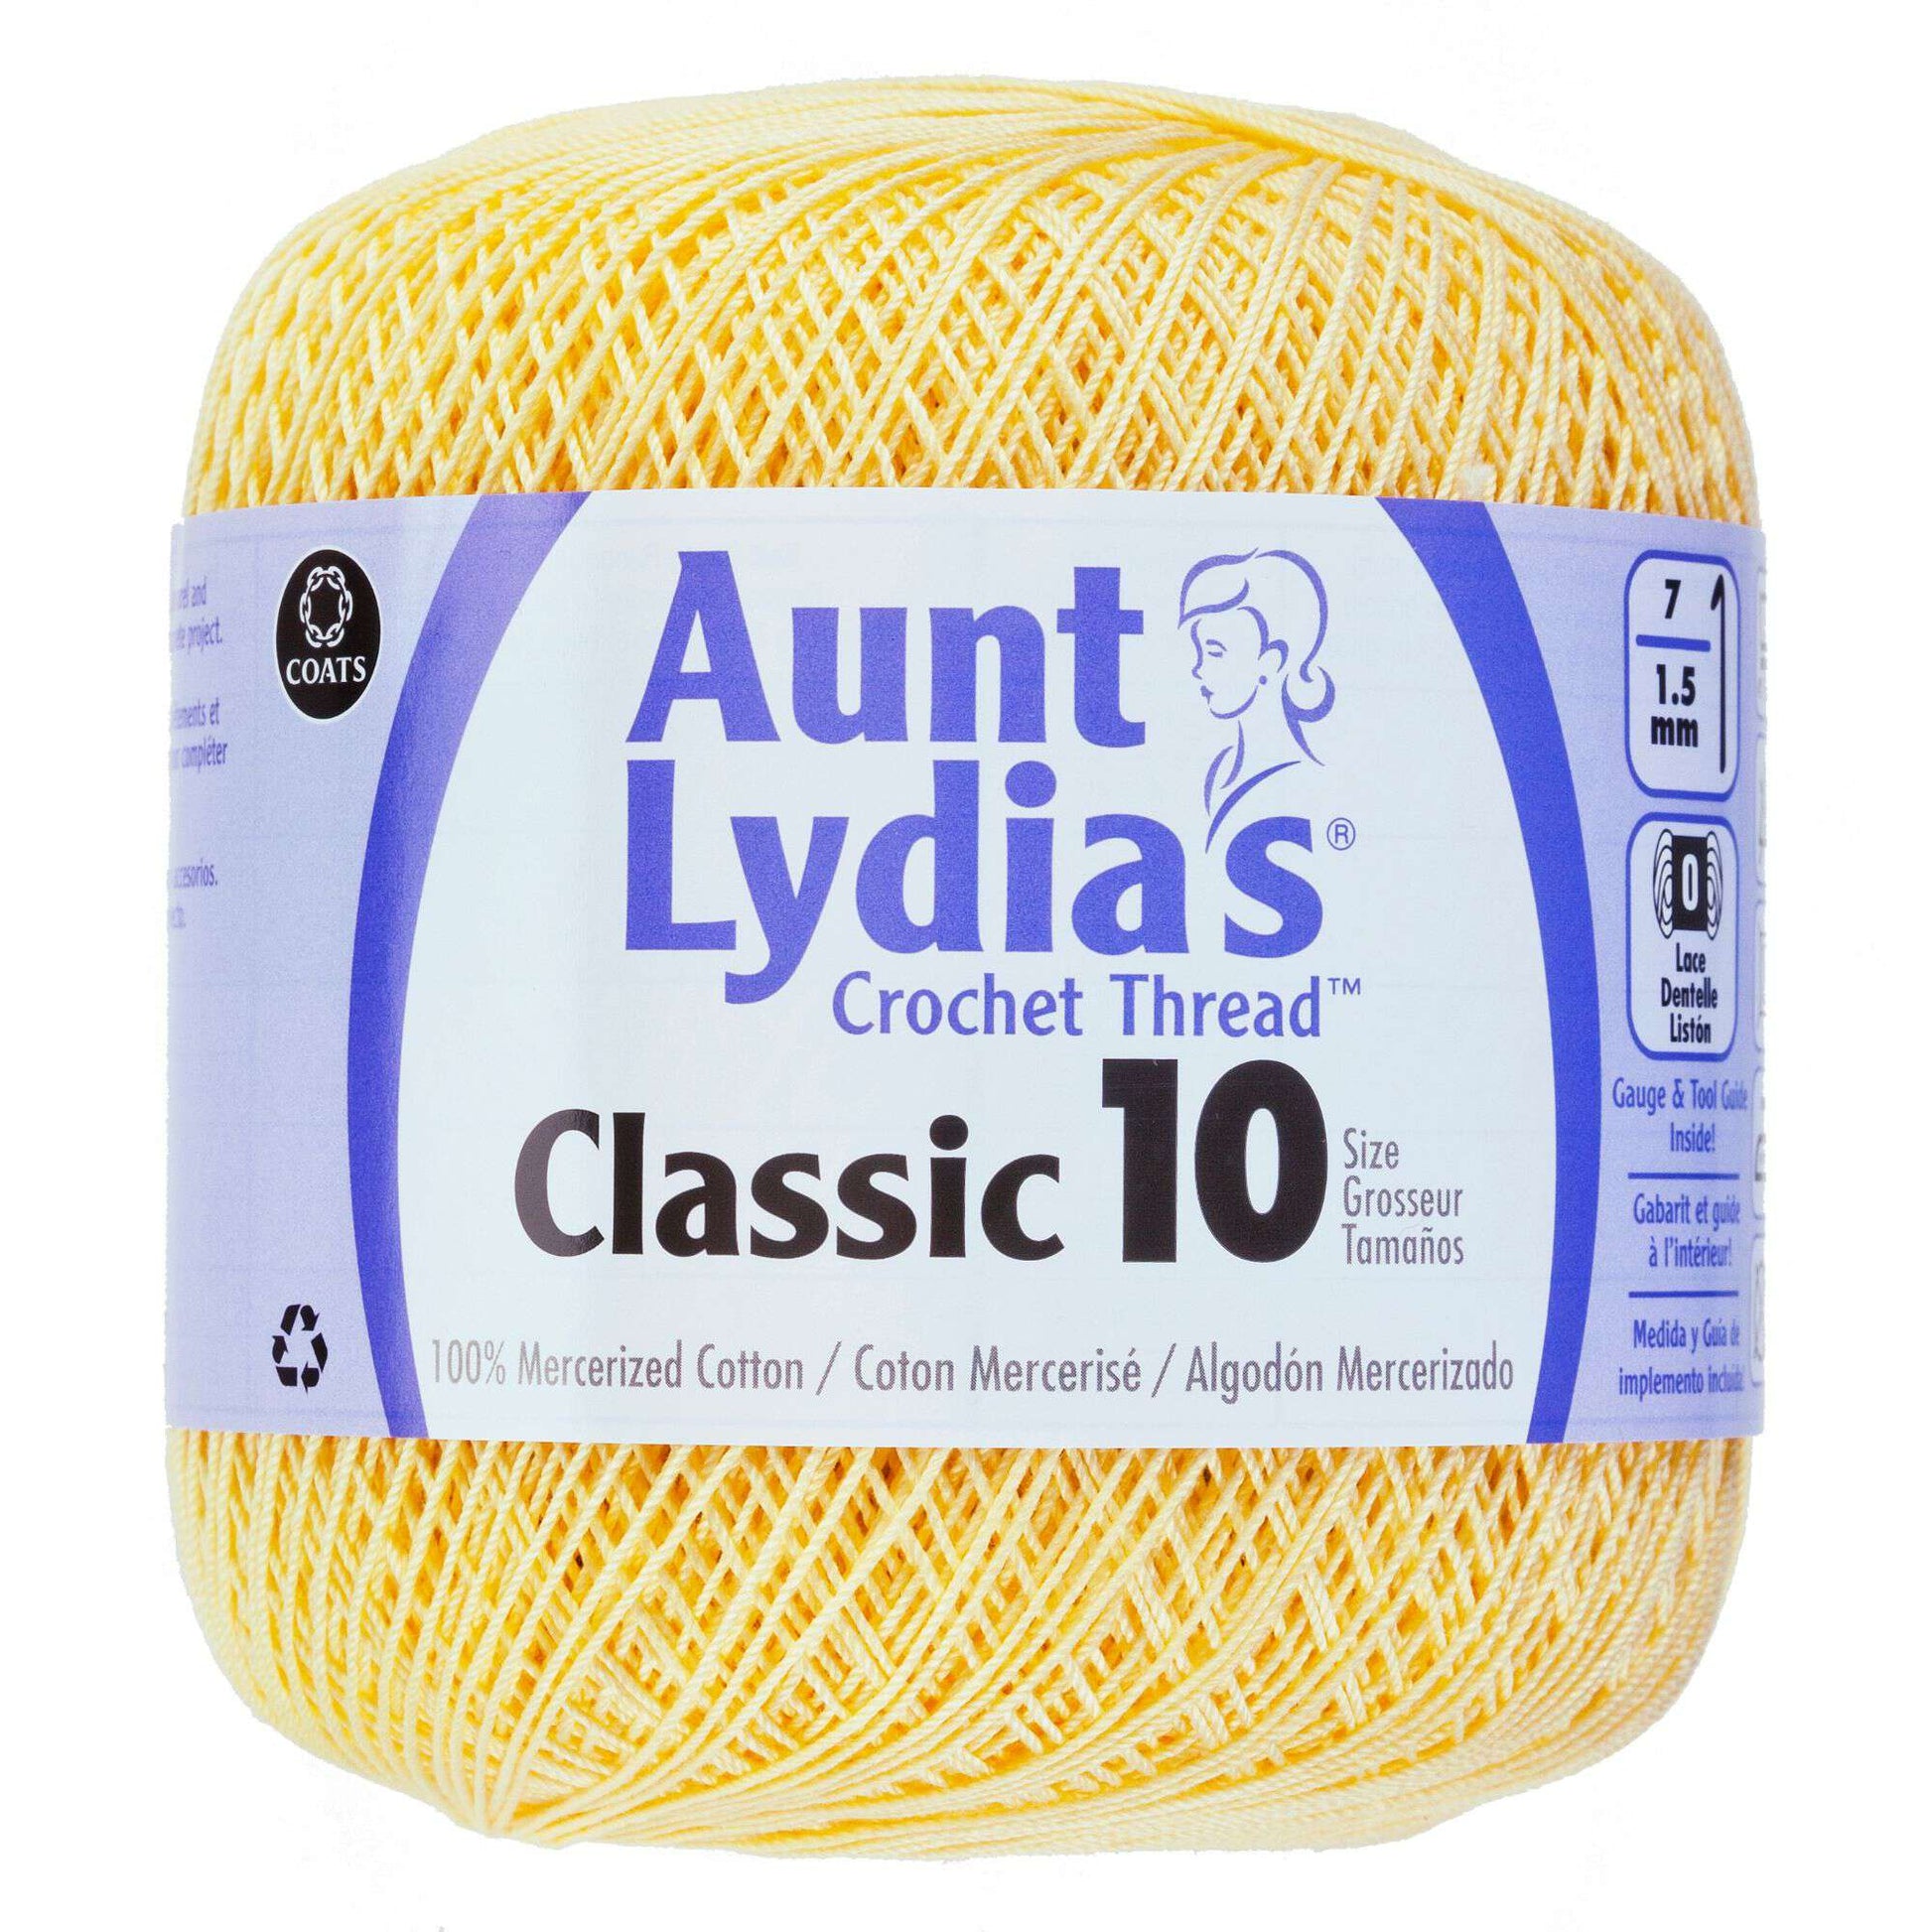 Aunt Lydia Classic Crochet Thread, Blacklight